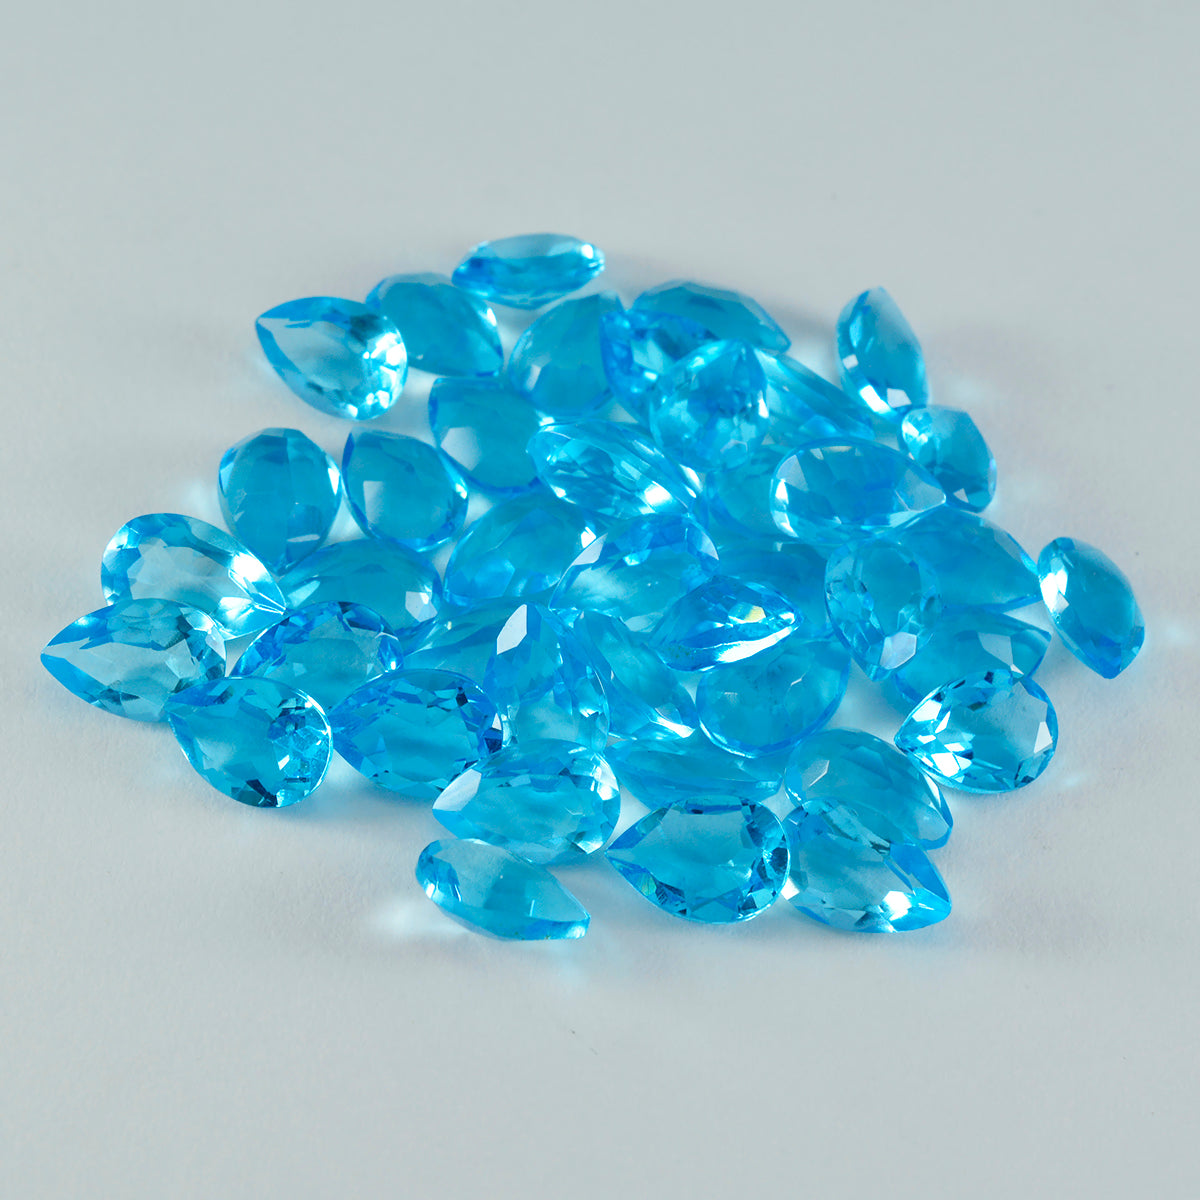 Riyogems 1PC Blue Topaz CZ Faceted 5x7 mm Pear Shape astonishing Quality Gemstone